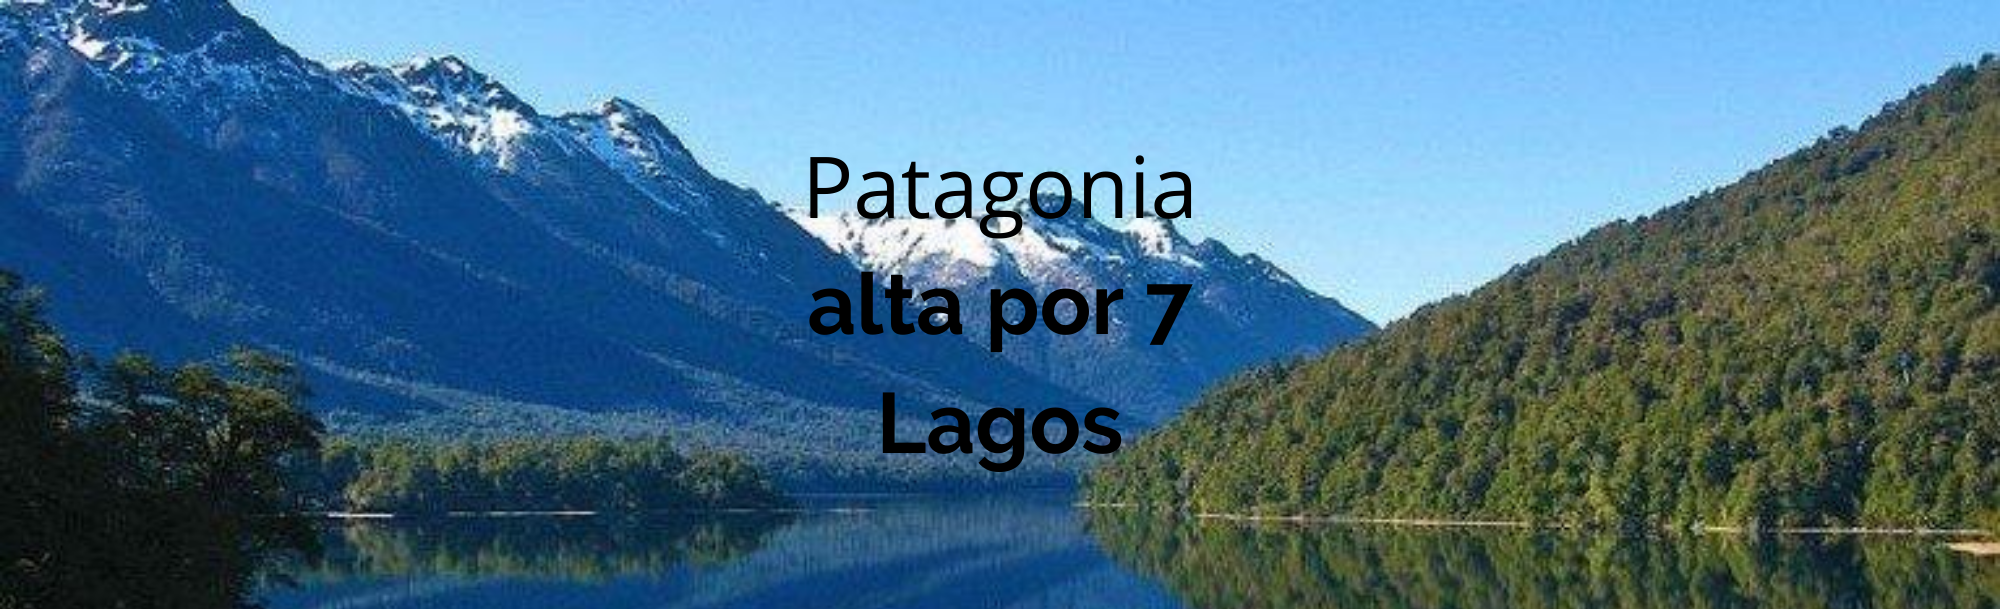 Patagonia alta por 7 Lagos